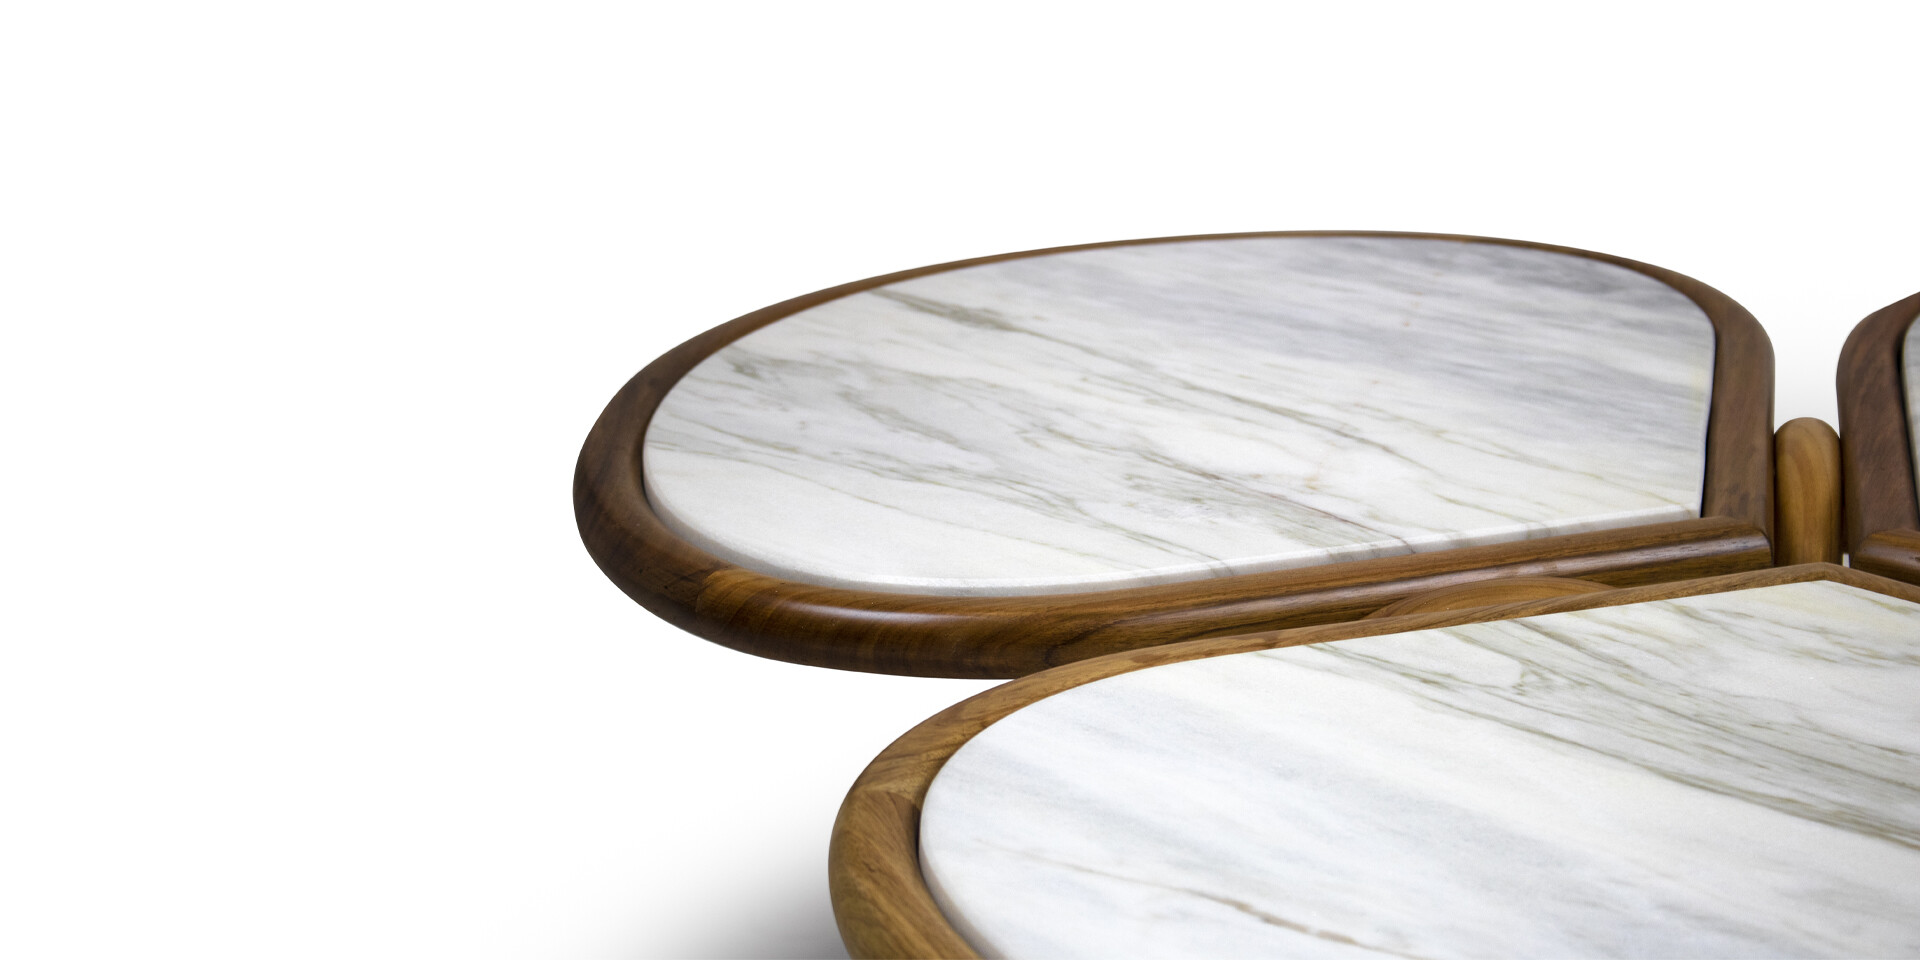 ROATAN COFFEE TABLE Detail Marble View ALMA de LUCE